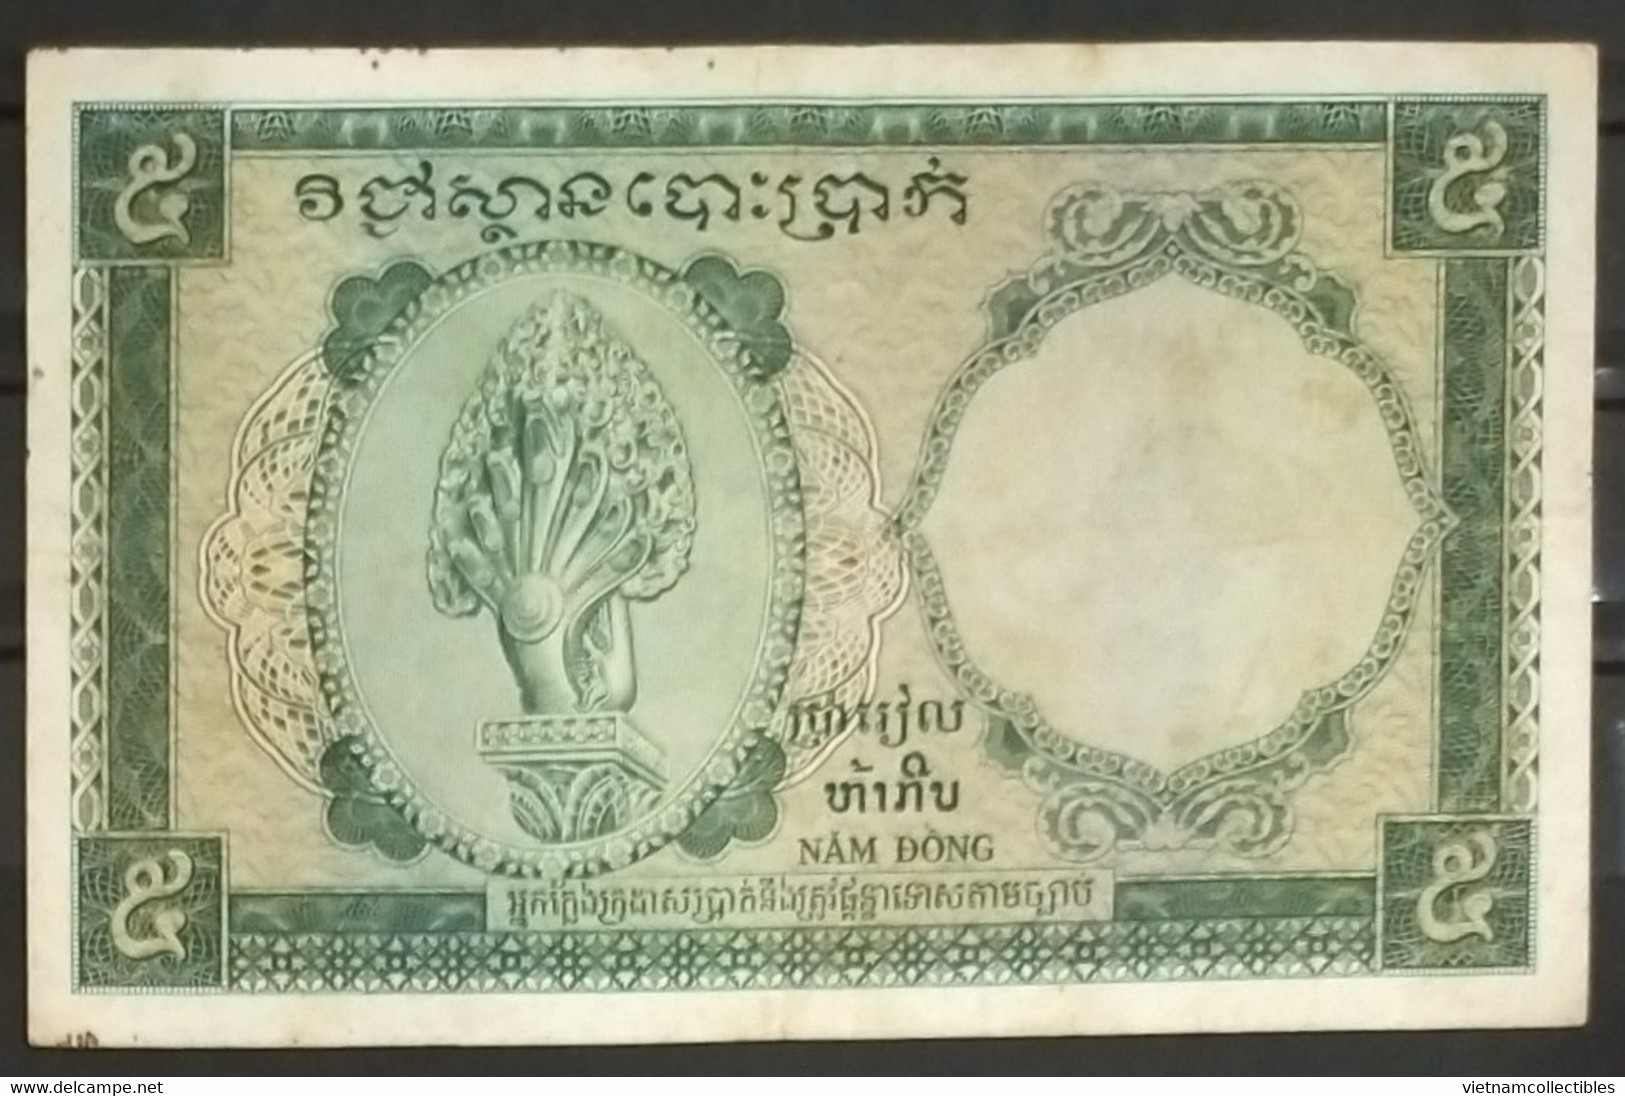 Indochina Indochine Vietnam Viet Nam Laos Cambodia 5 Piastres VF Banknote Note / Billet 1953 - Pick # 95 / 02 Photo - Indocina